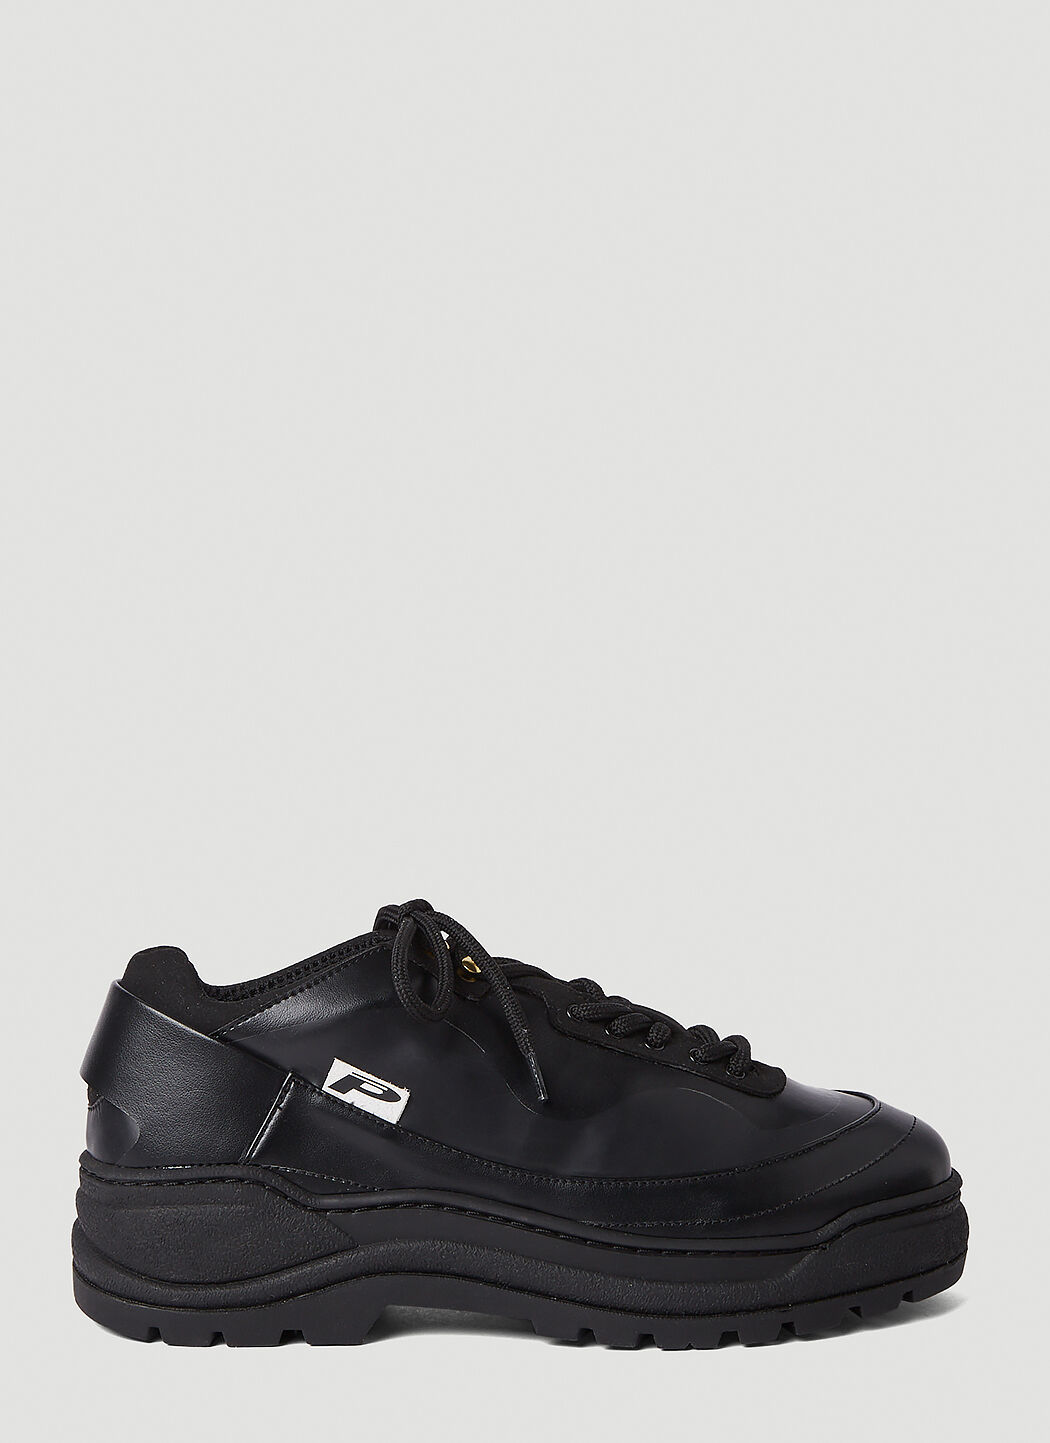 Phileo x Salomon Approche Sneakers Black phs0354001